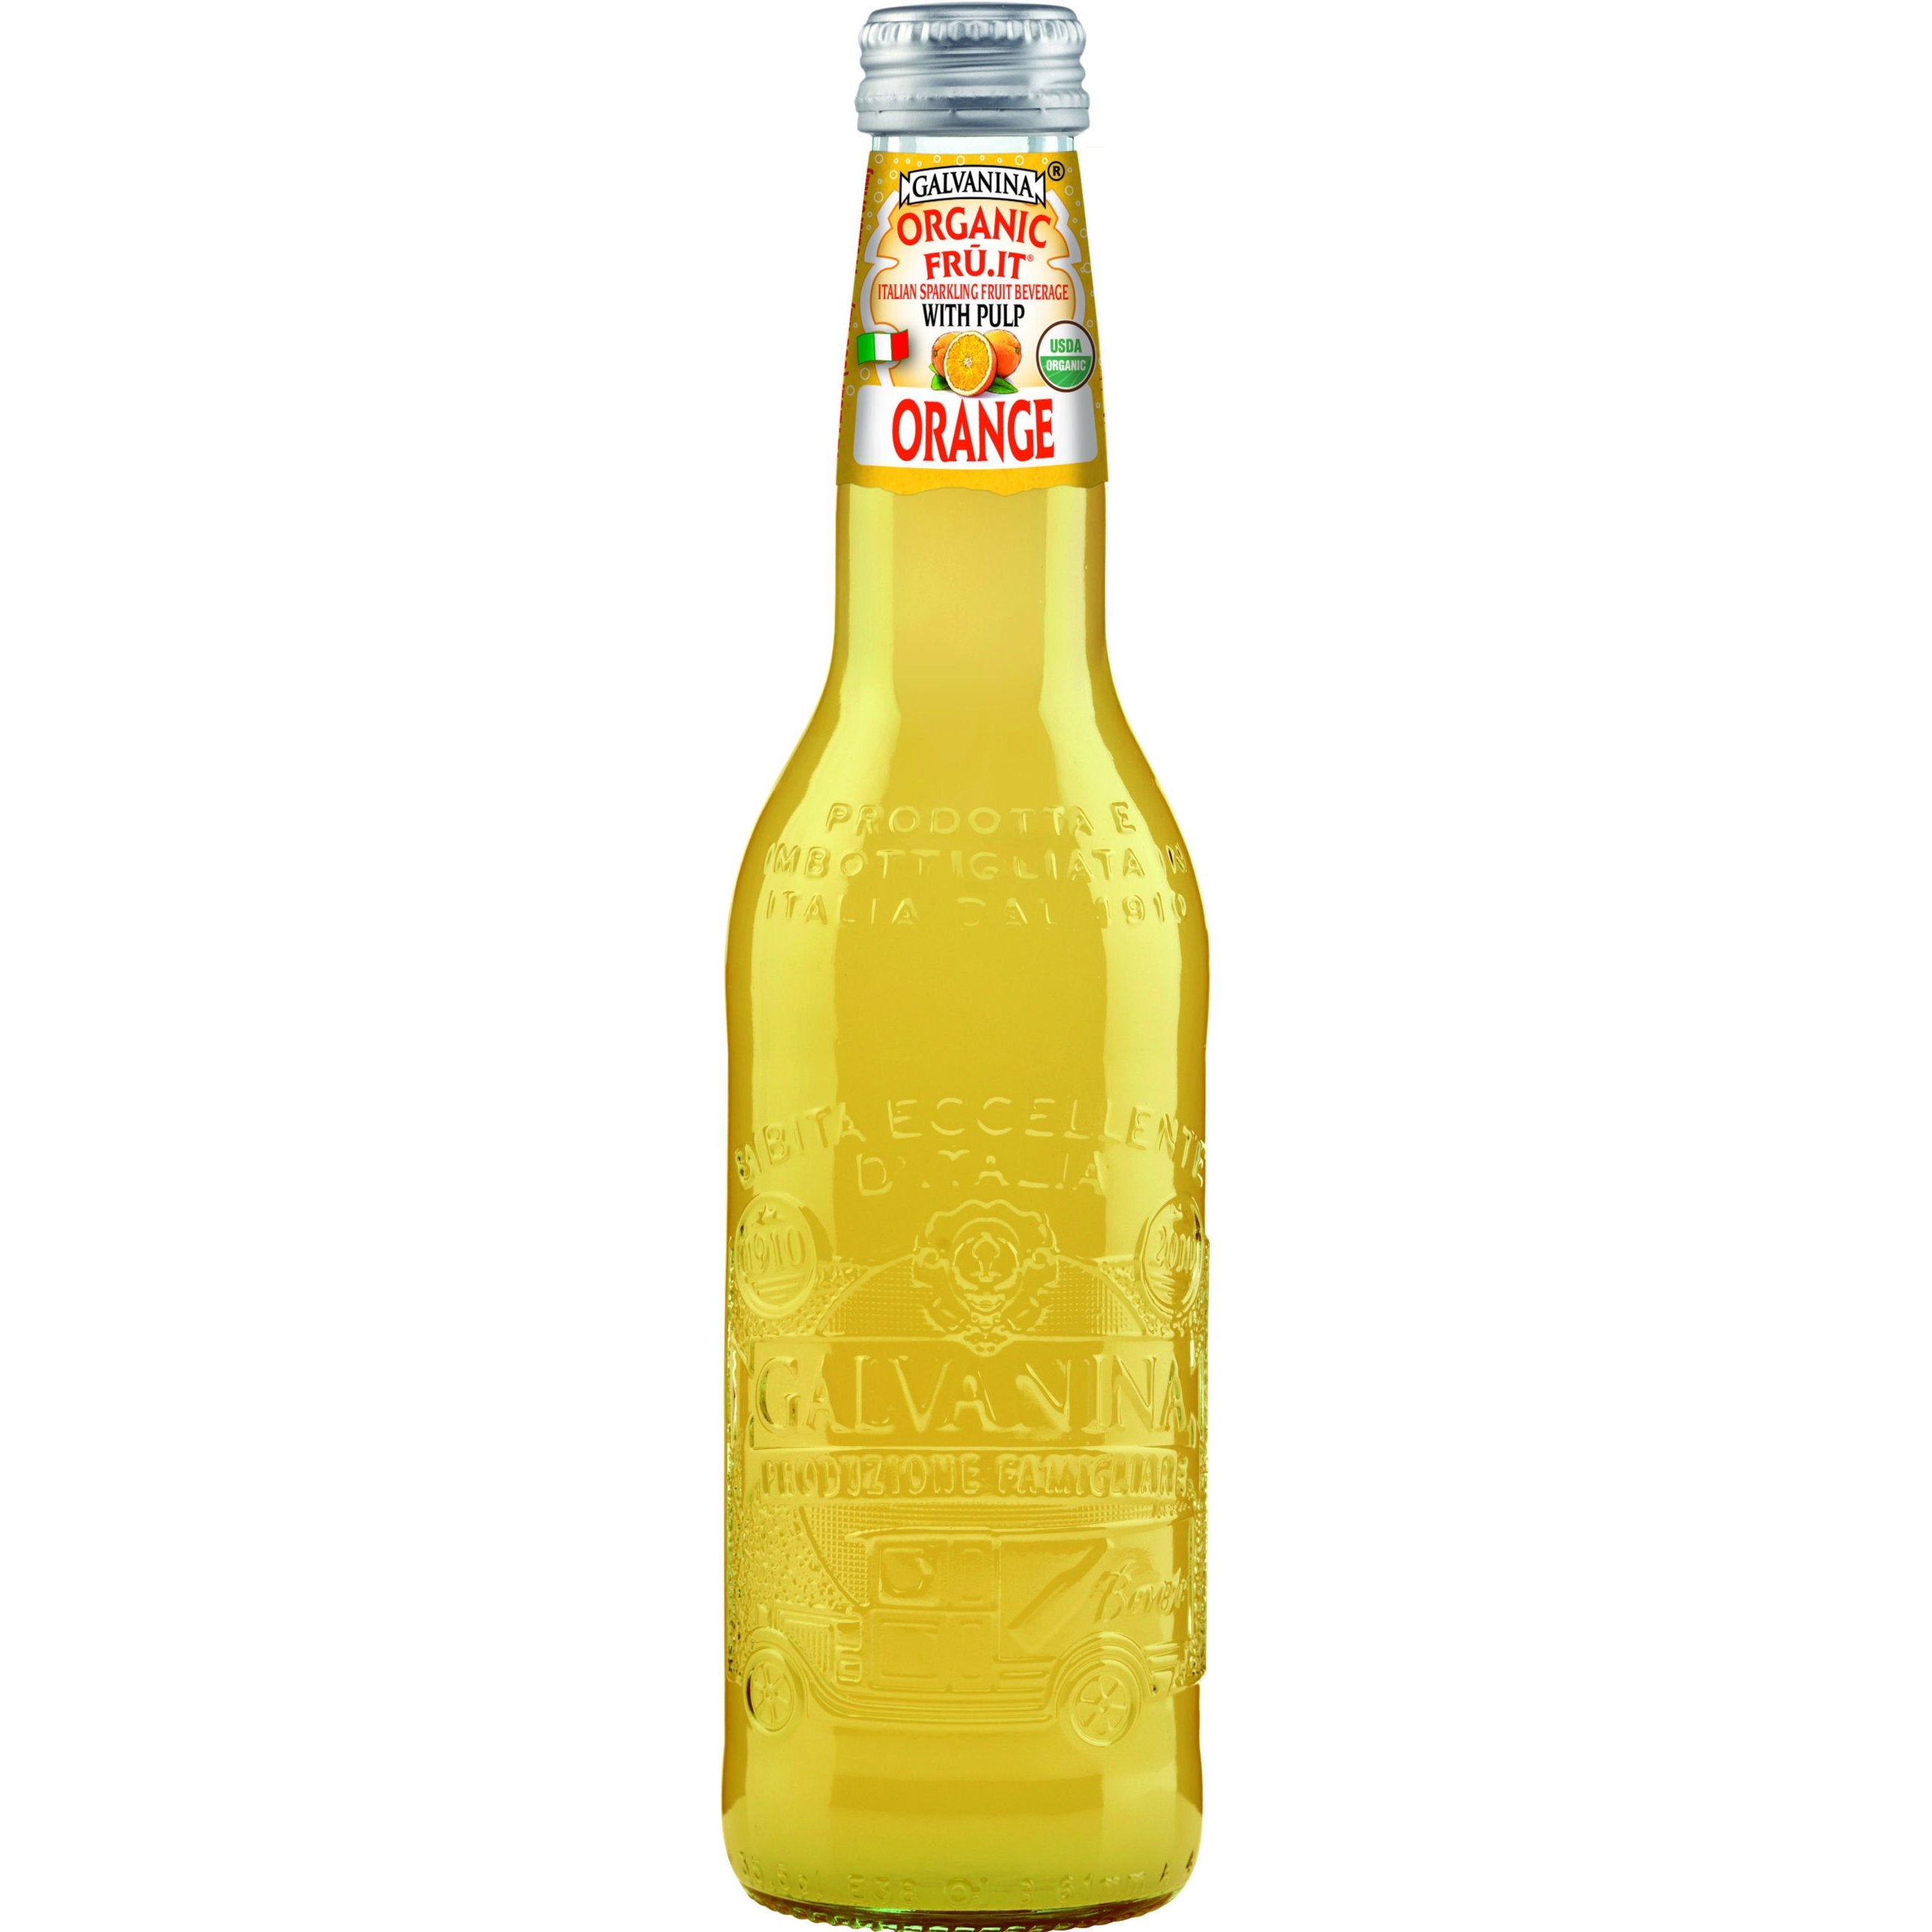 Galvanina Organic Orange Soda with Pulp, 12 fl oz | 355 mL